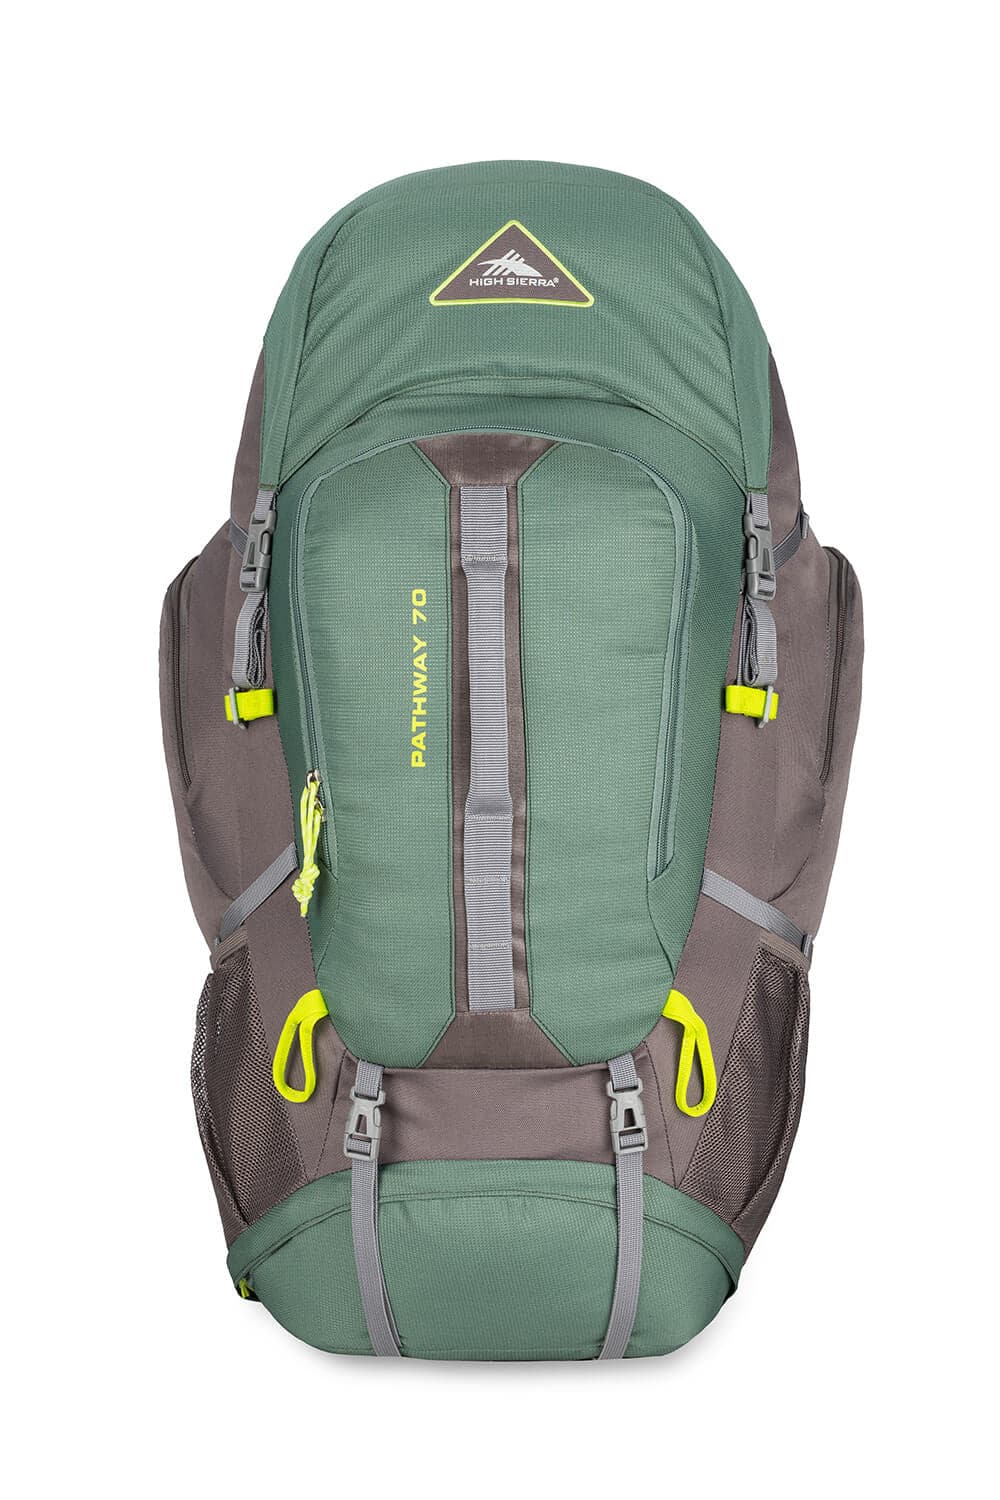 High Sierra Pathway Frame Packs 70L Backpack